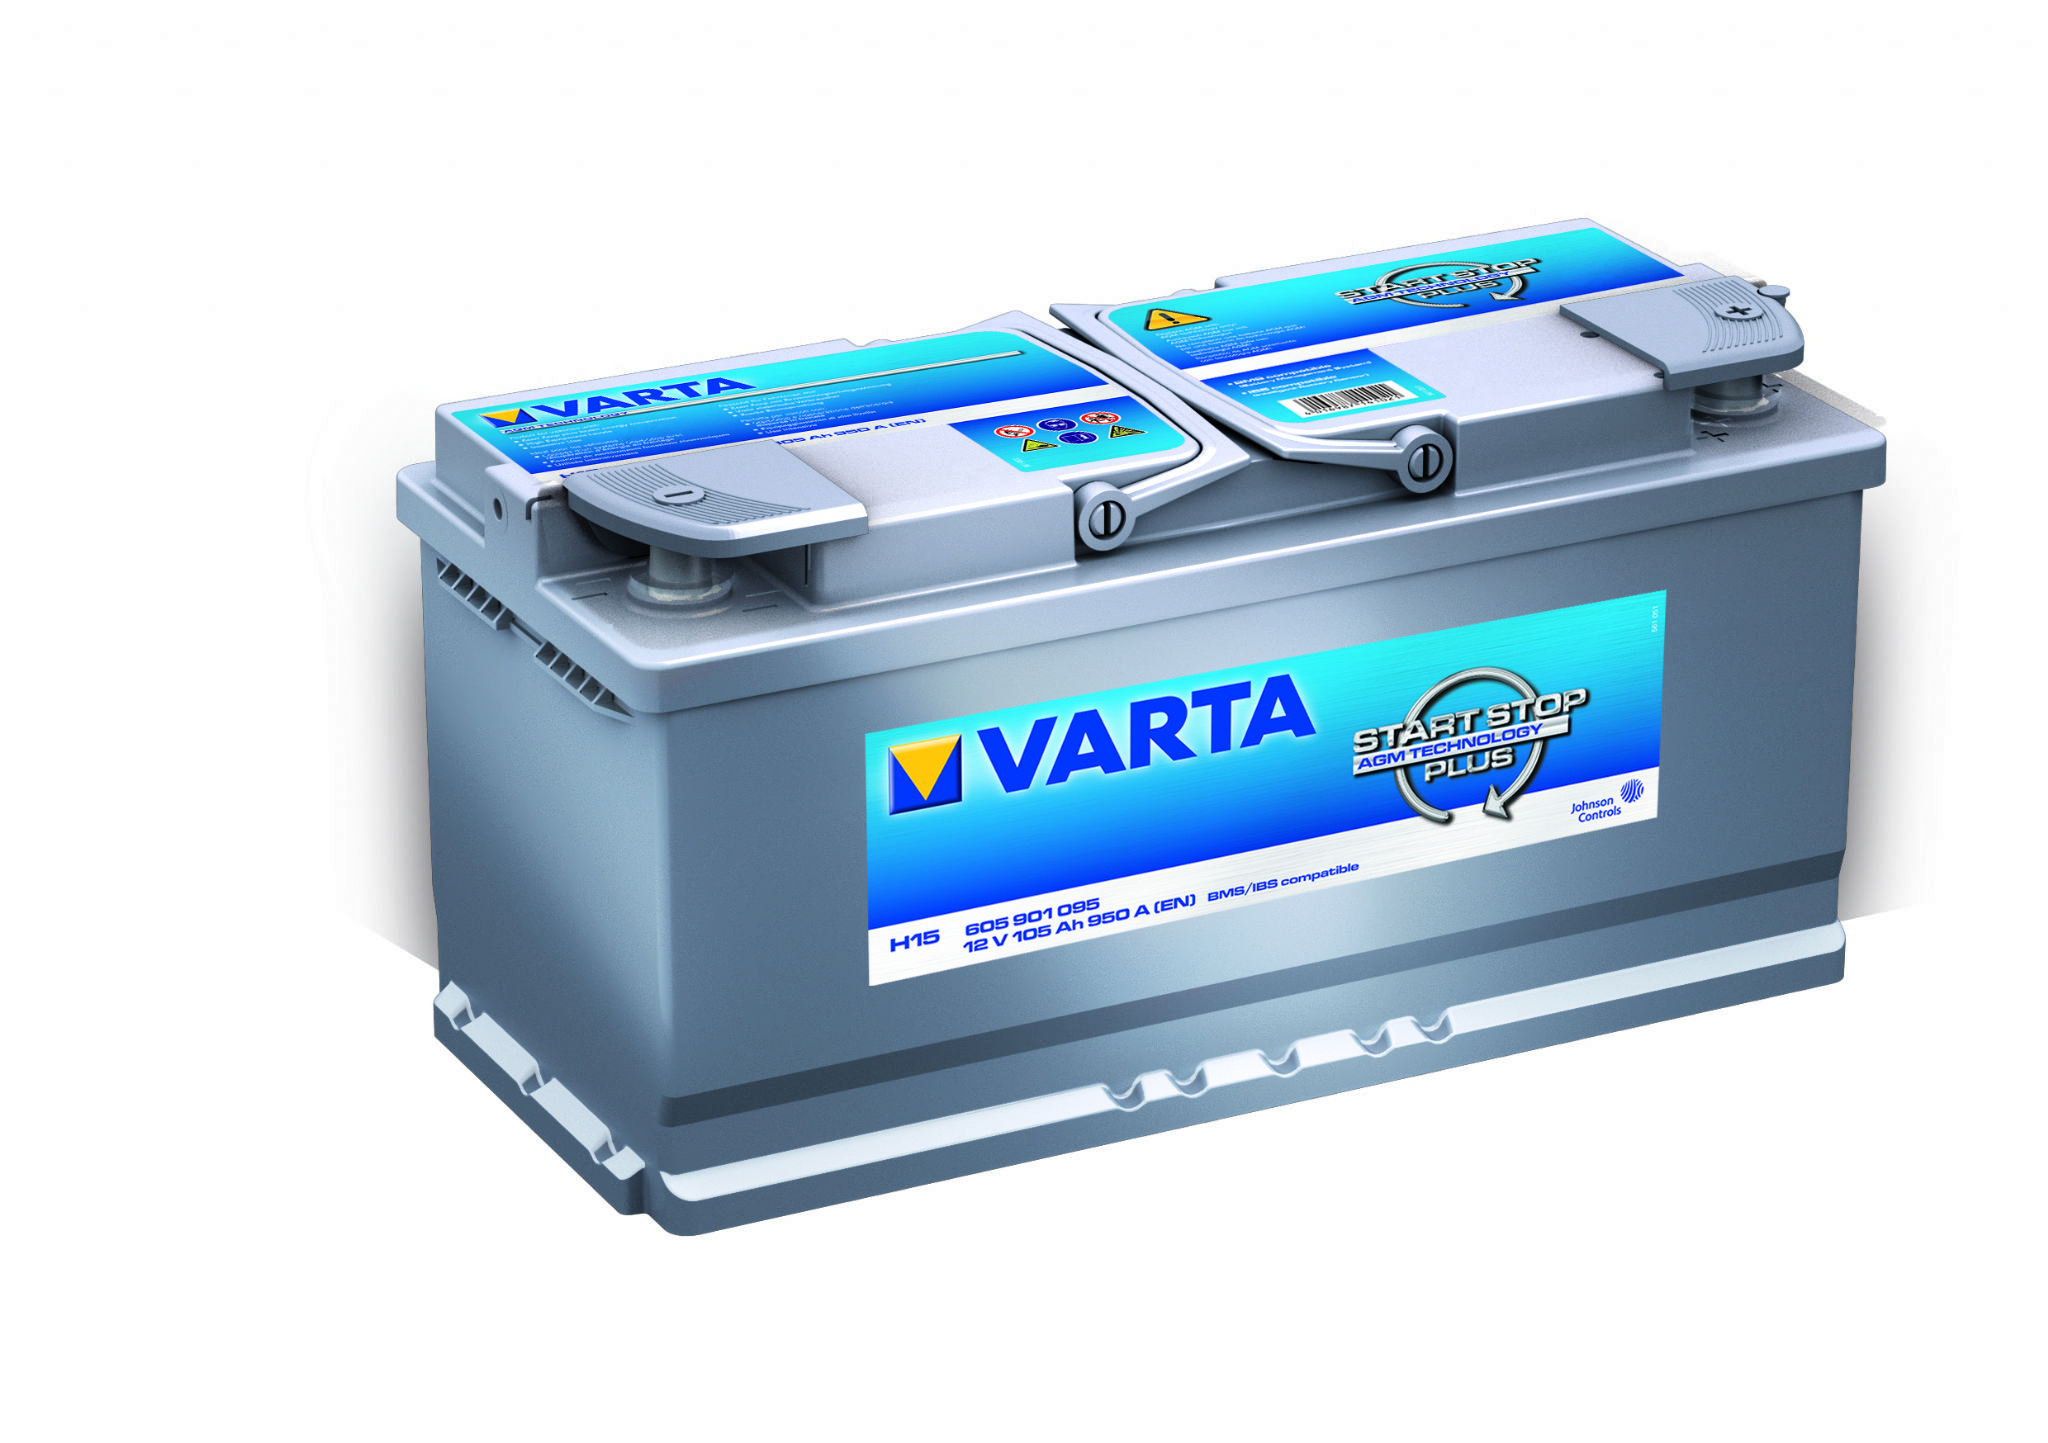 Автомобильный аккумулятор dynamic. 580901080 Varta. Varta h15 Silver Dynamic. Varta 80ah. 580 901 080 Varta.